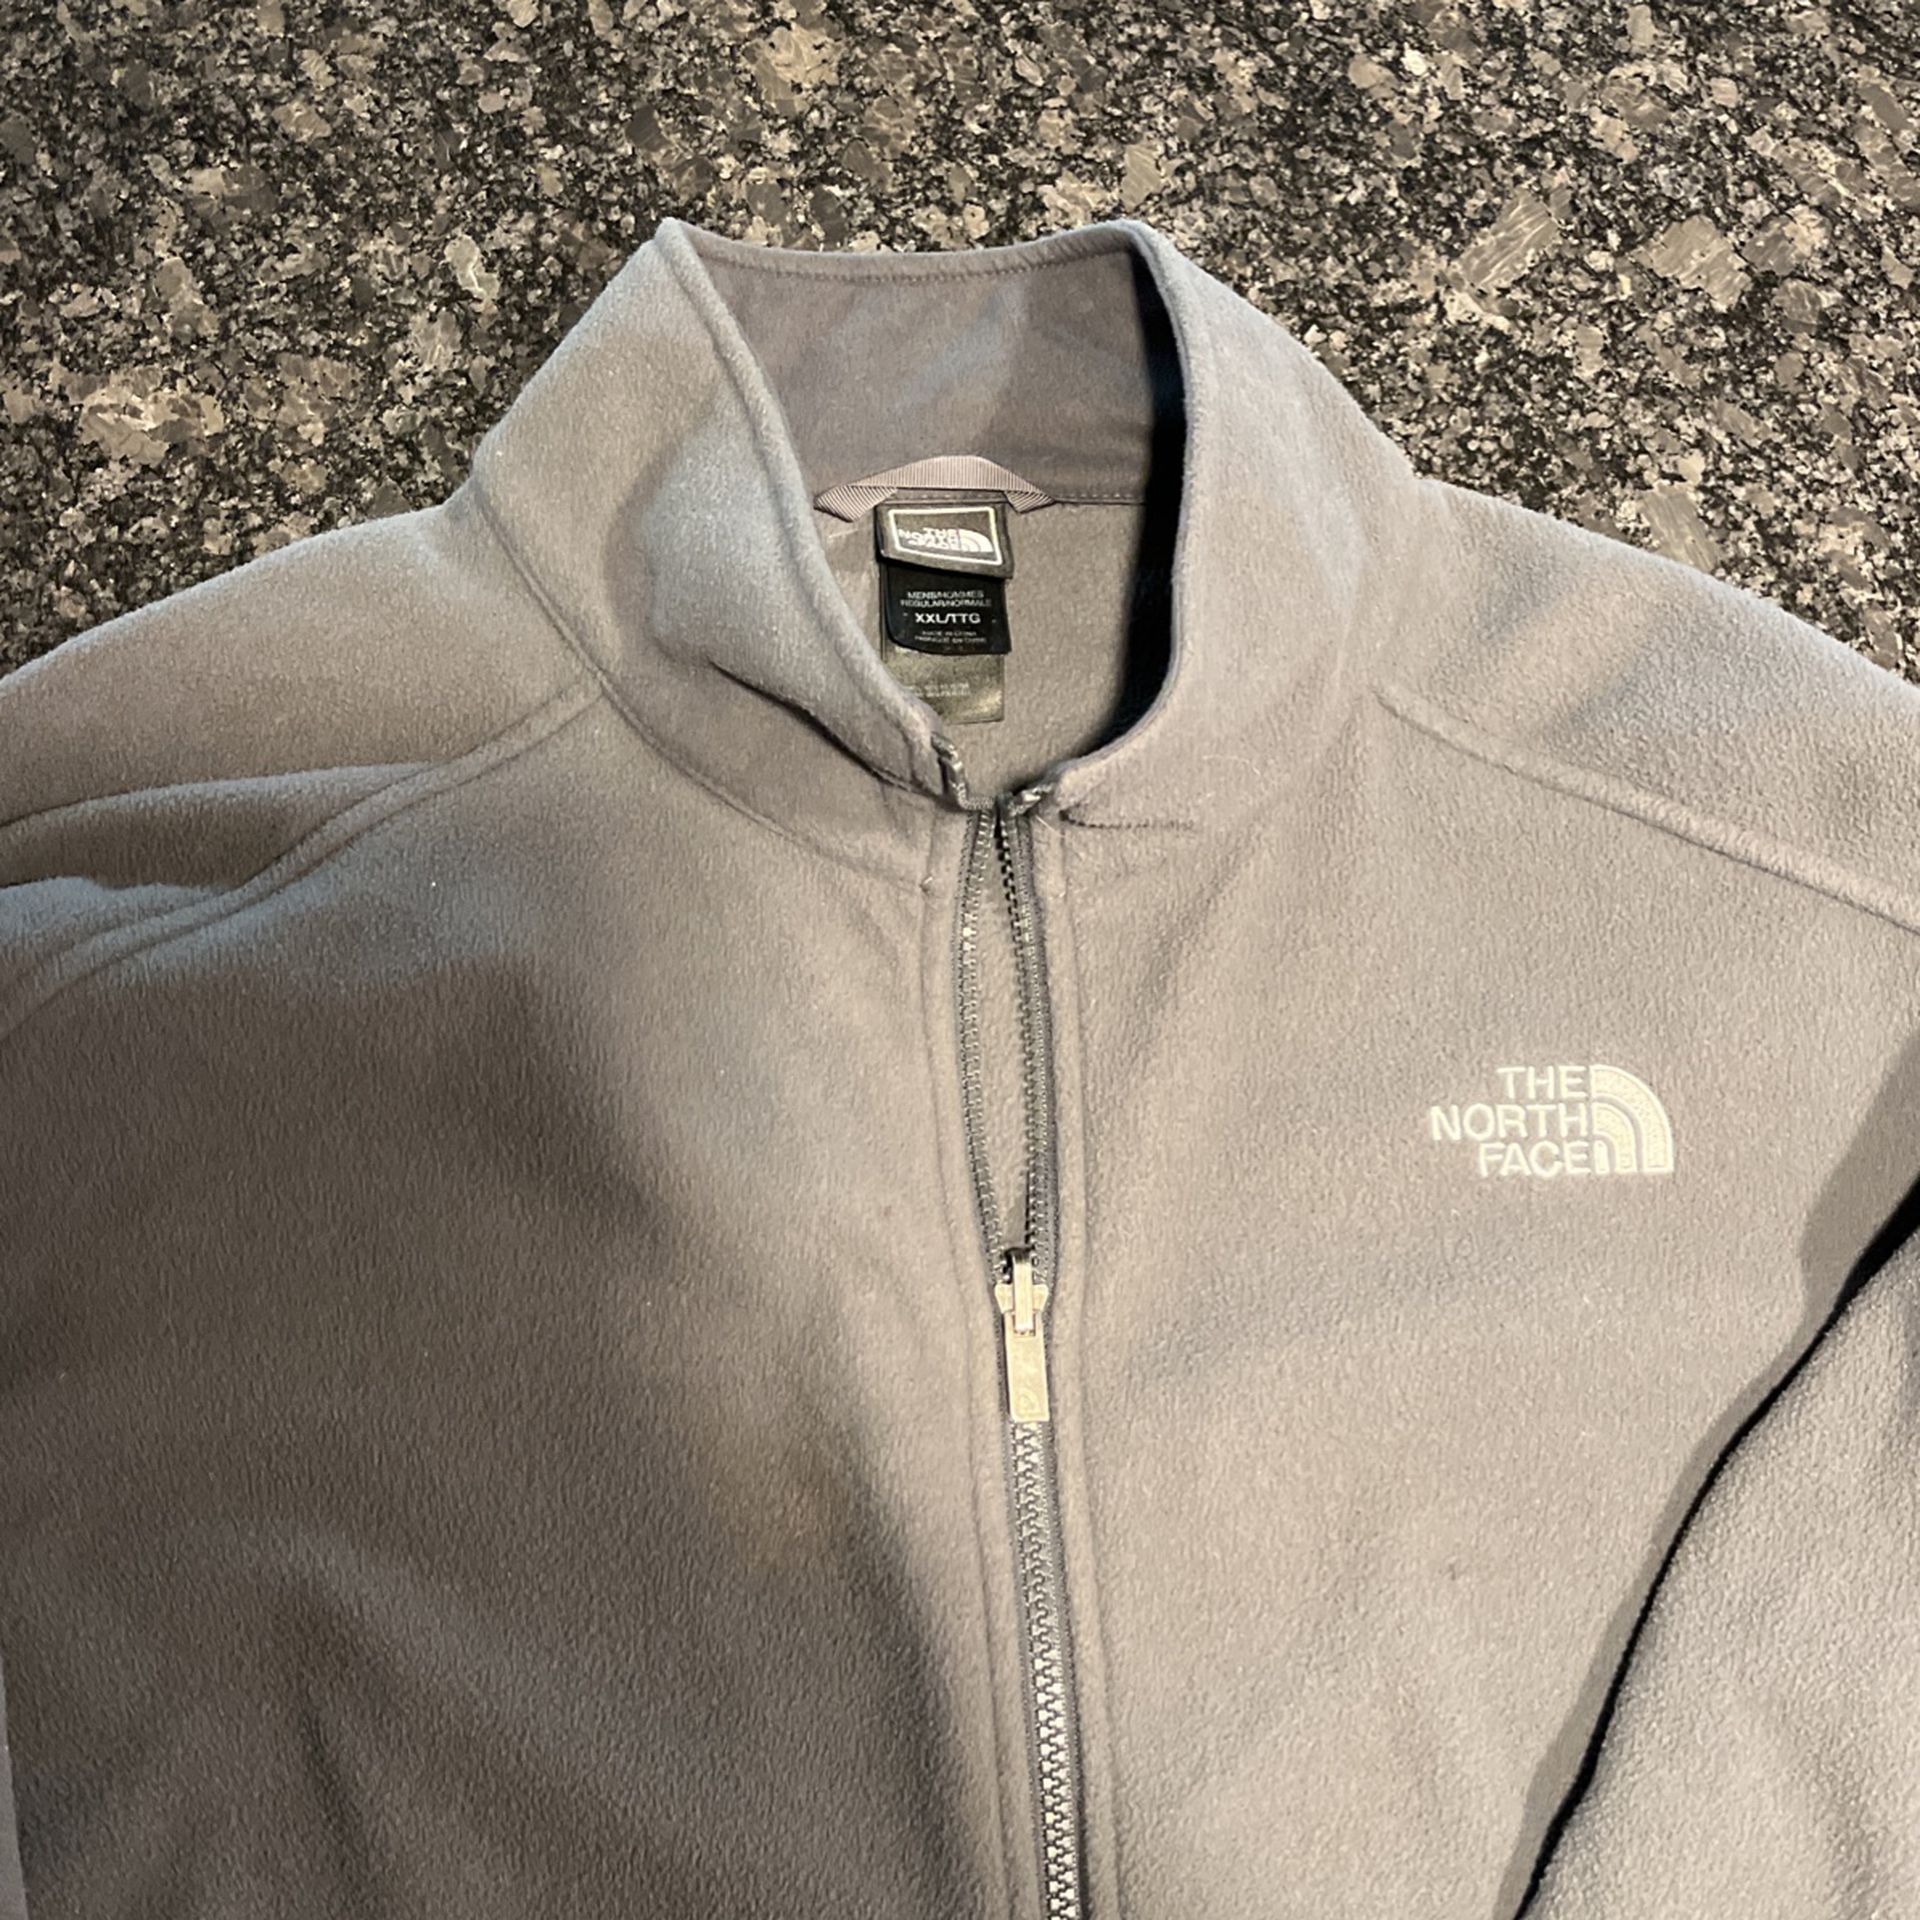 Gray North Face Zip Up Jacket (New) - $60